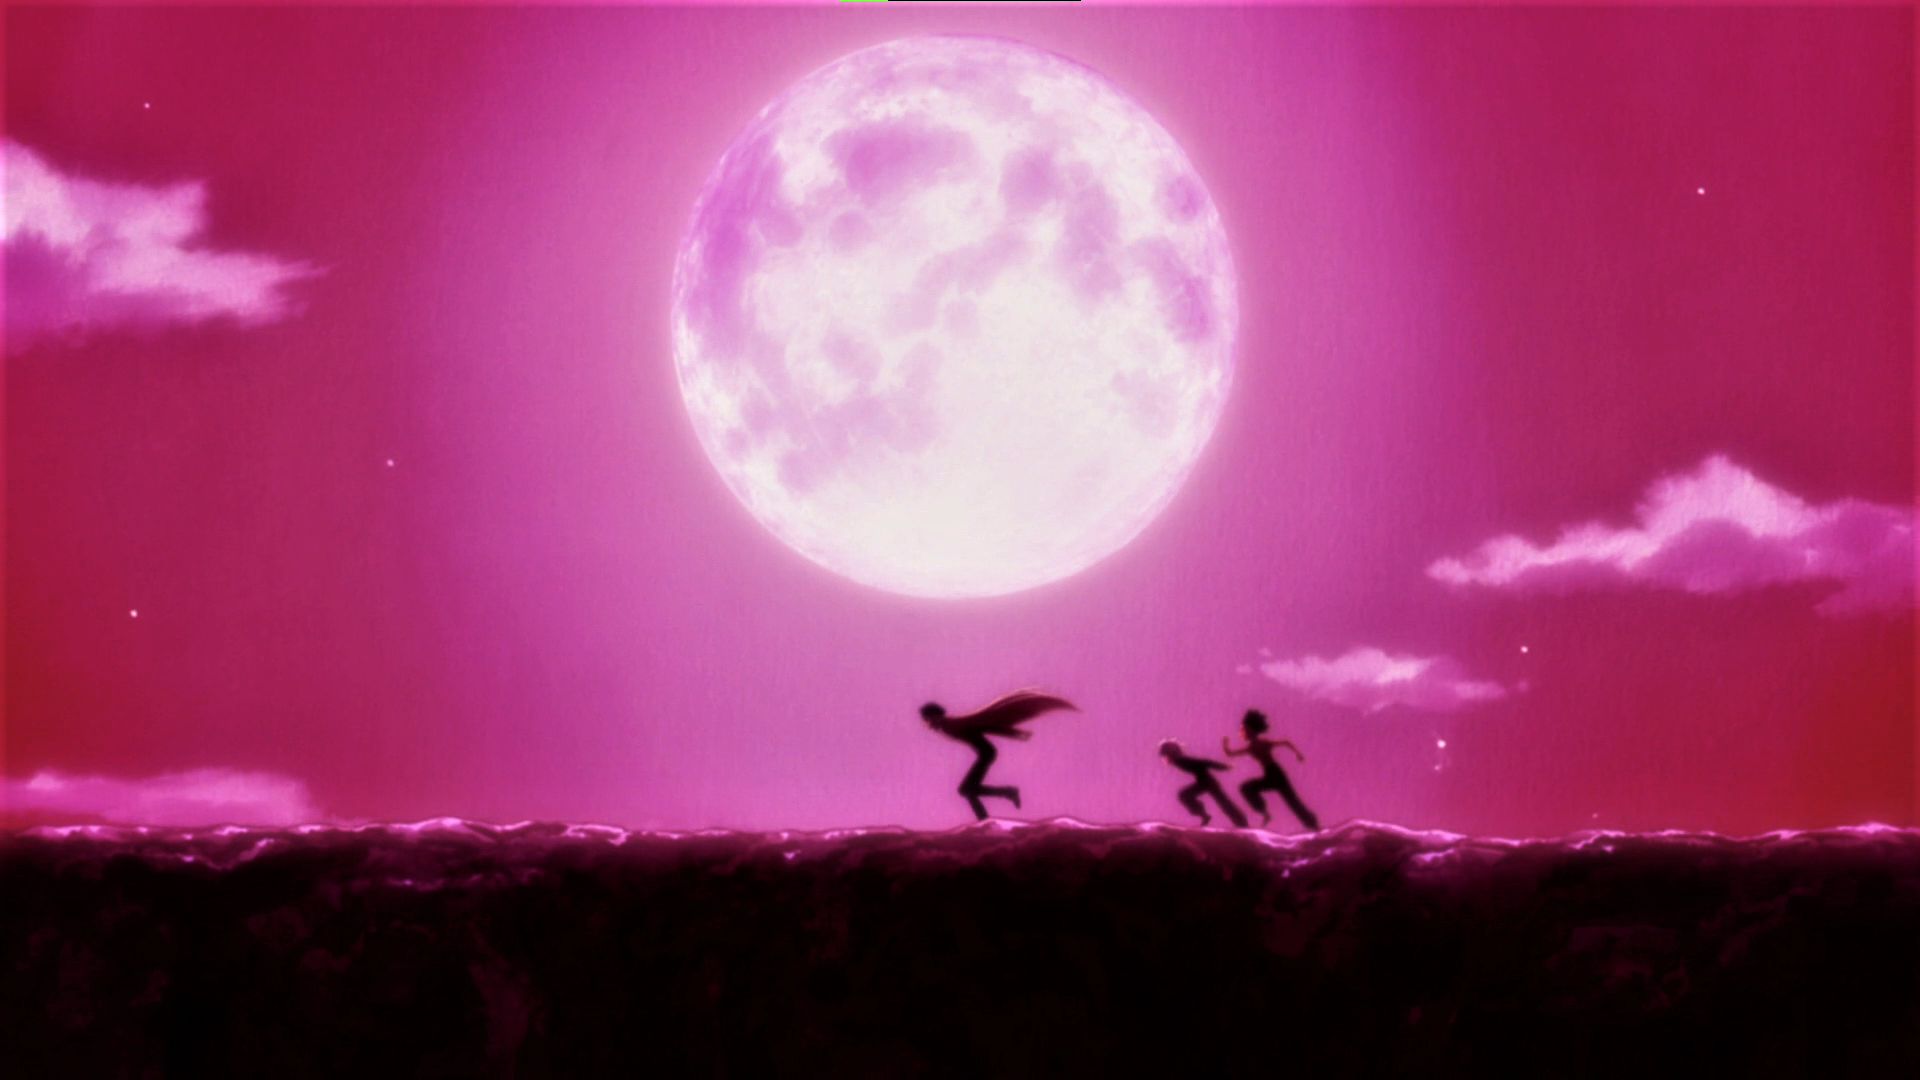 Anime 1920x1080 Hunter x Hunter kite  Killua Zoldyck Gon Freecss Blood moon Moon sky clouds running anime Anime screenshot anime boys silhouette